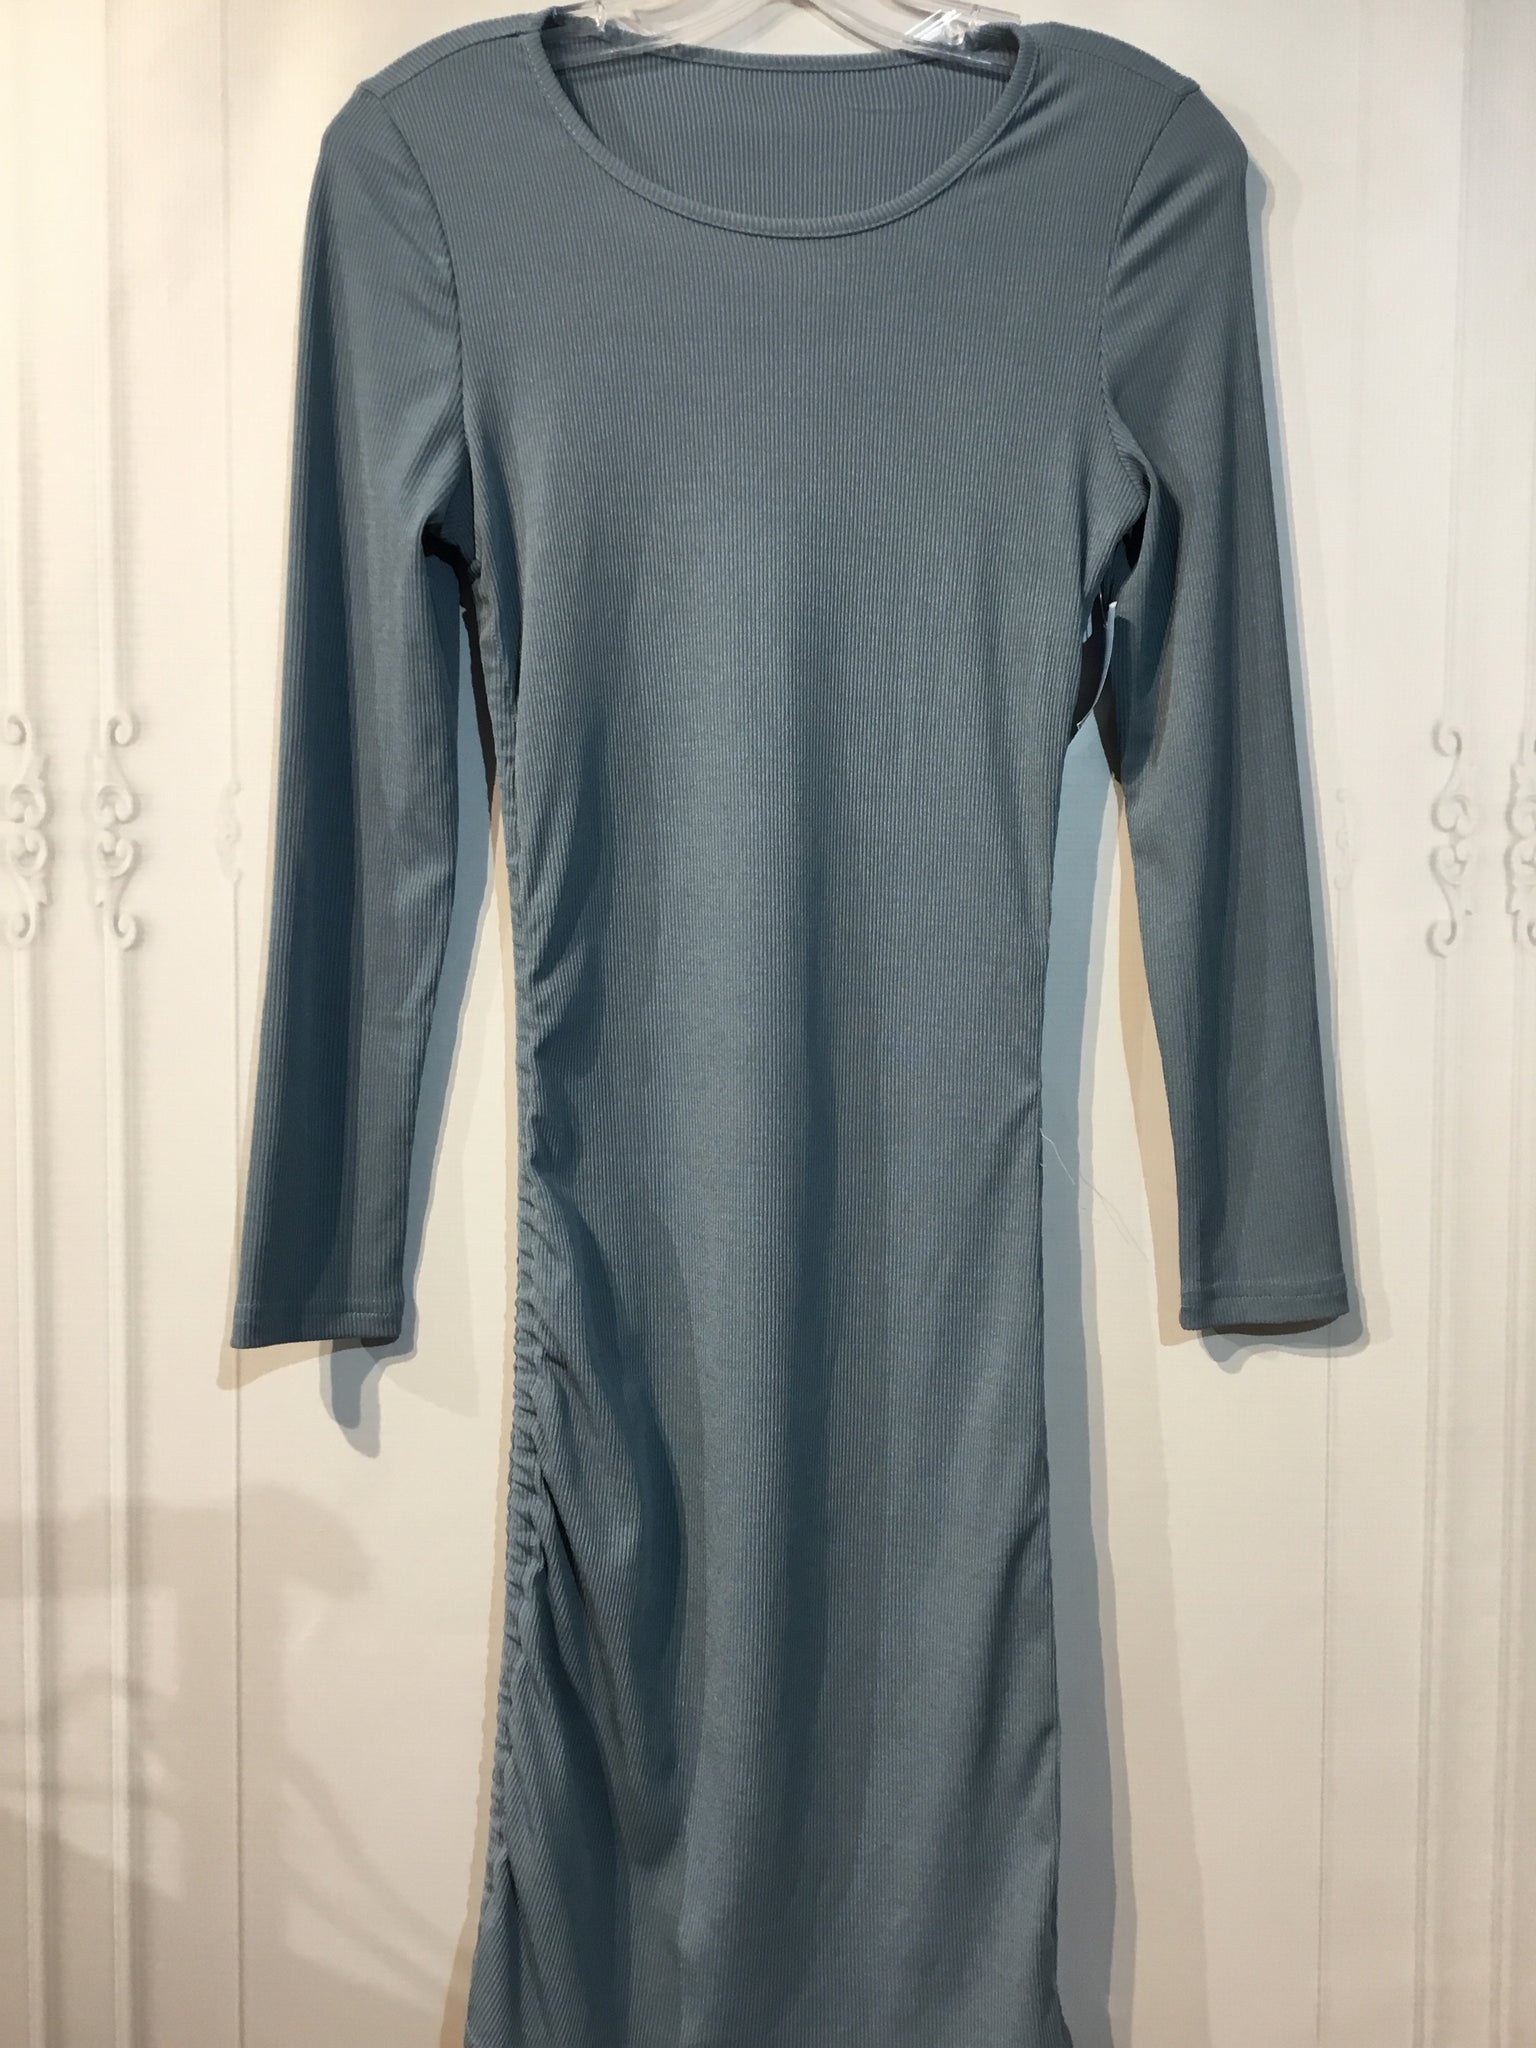 No Label Size S/4-6 Greyish Blue Dress